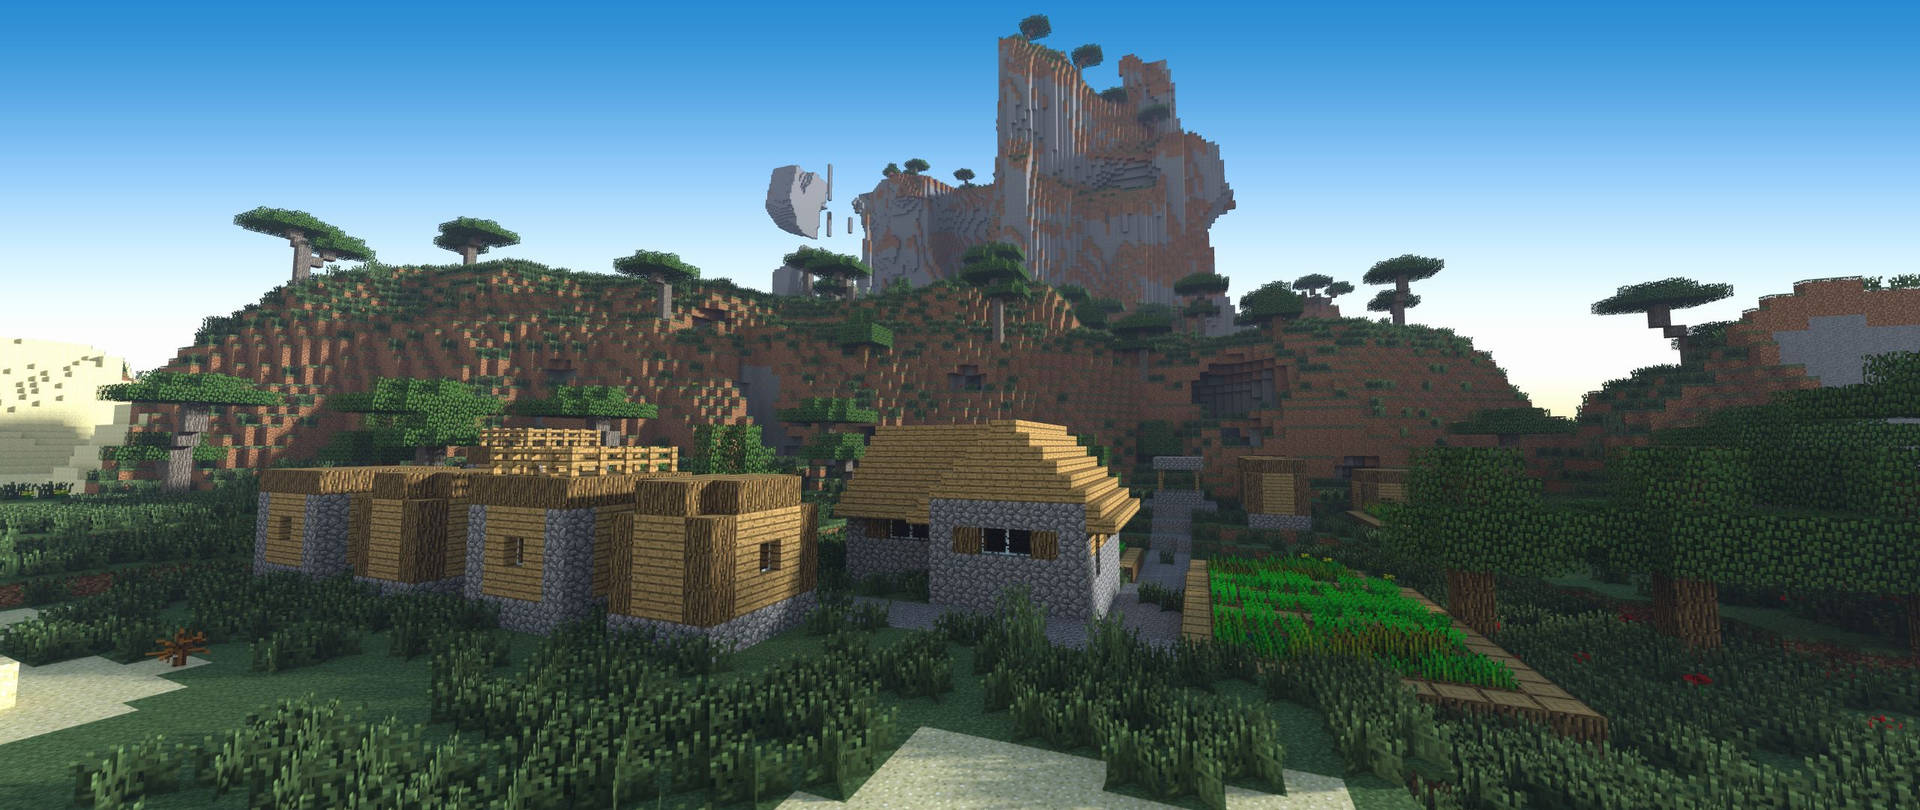 Minecraft Landscape Village Houses Wallpaper